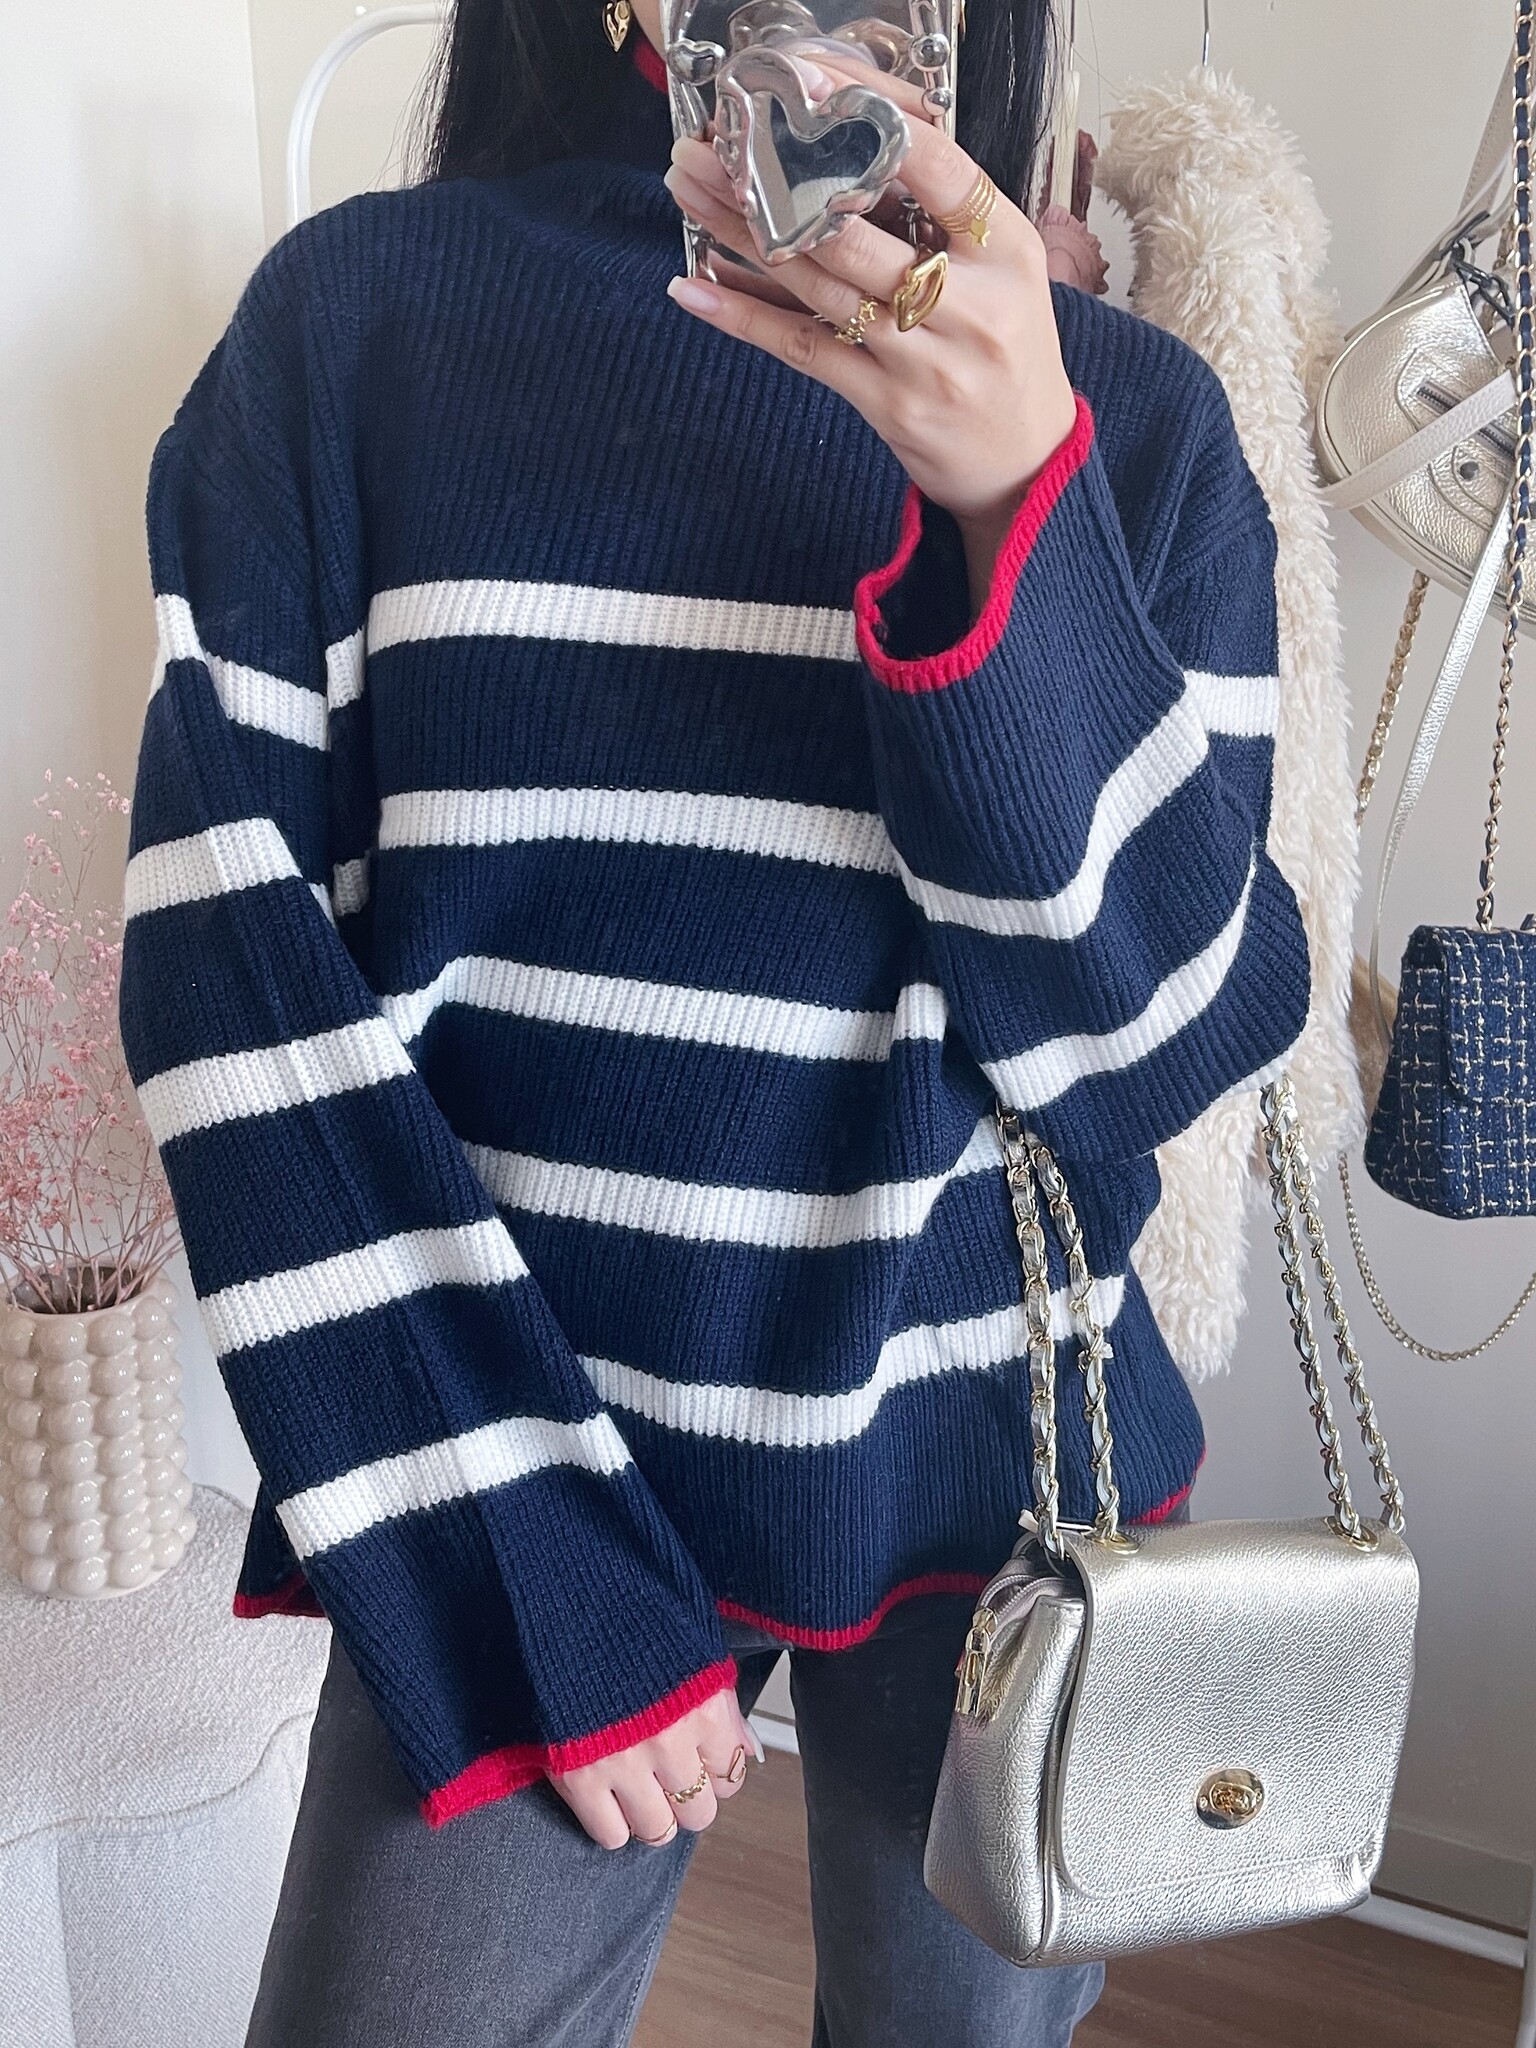 Striped Sweater Navy